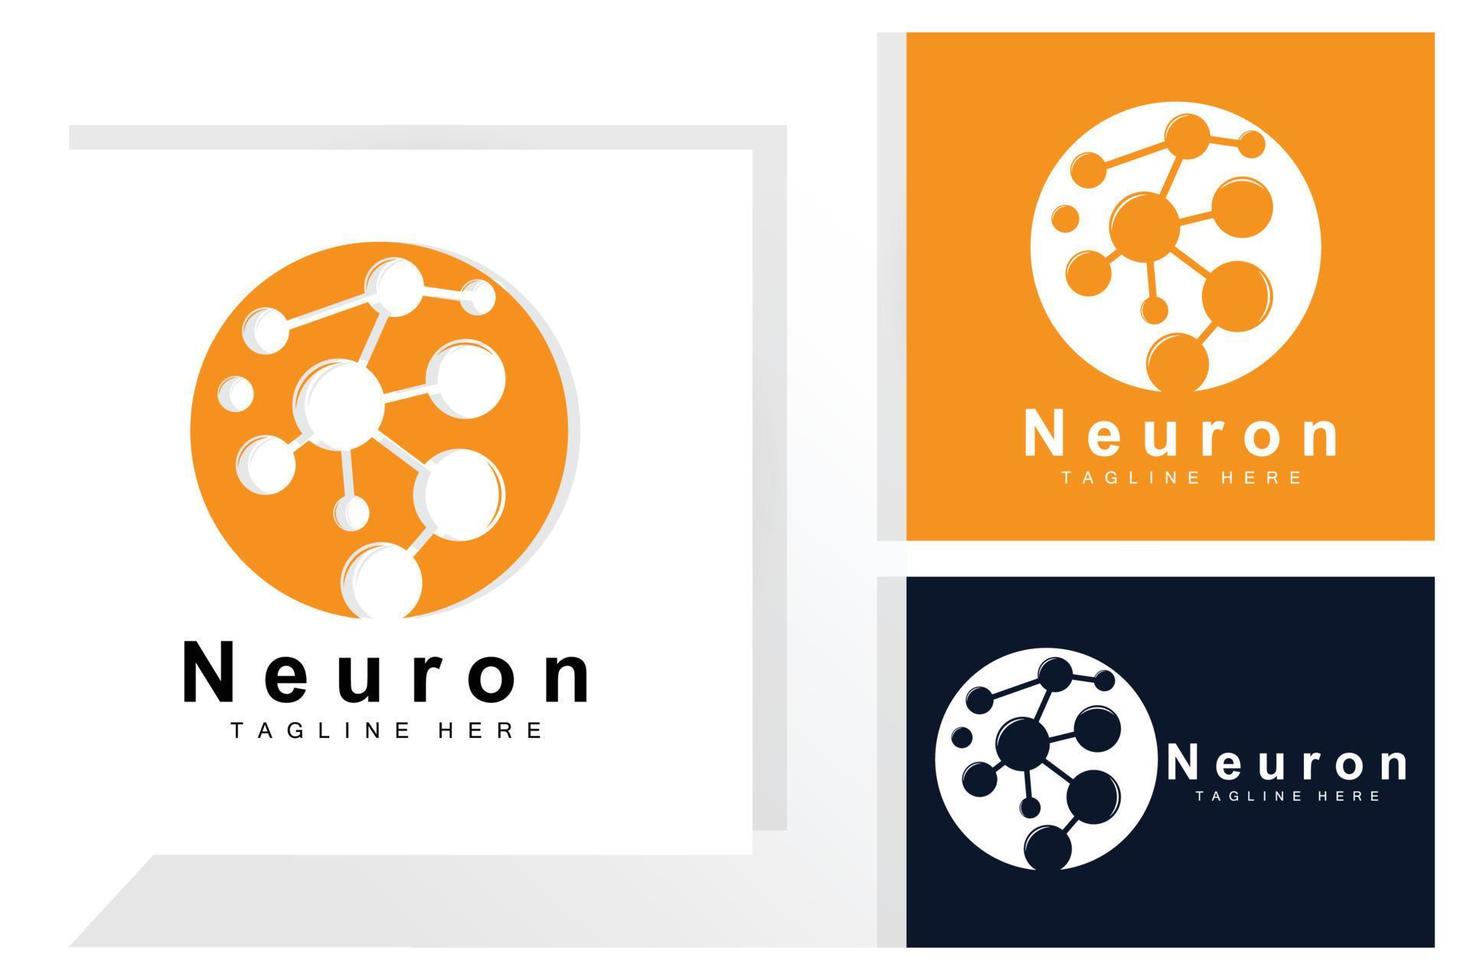 Neuron Logo Design Vector nerve cell illustration Molecular DNA health brand